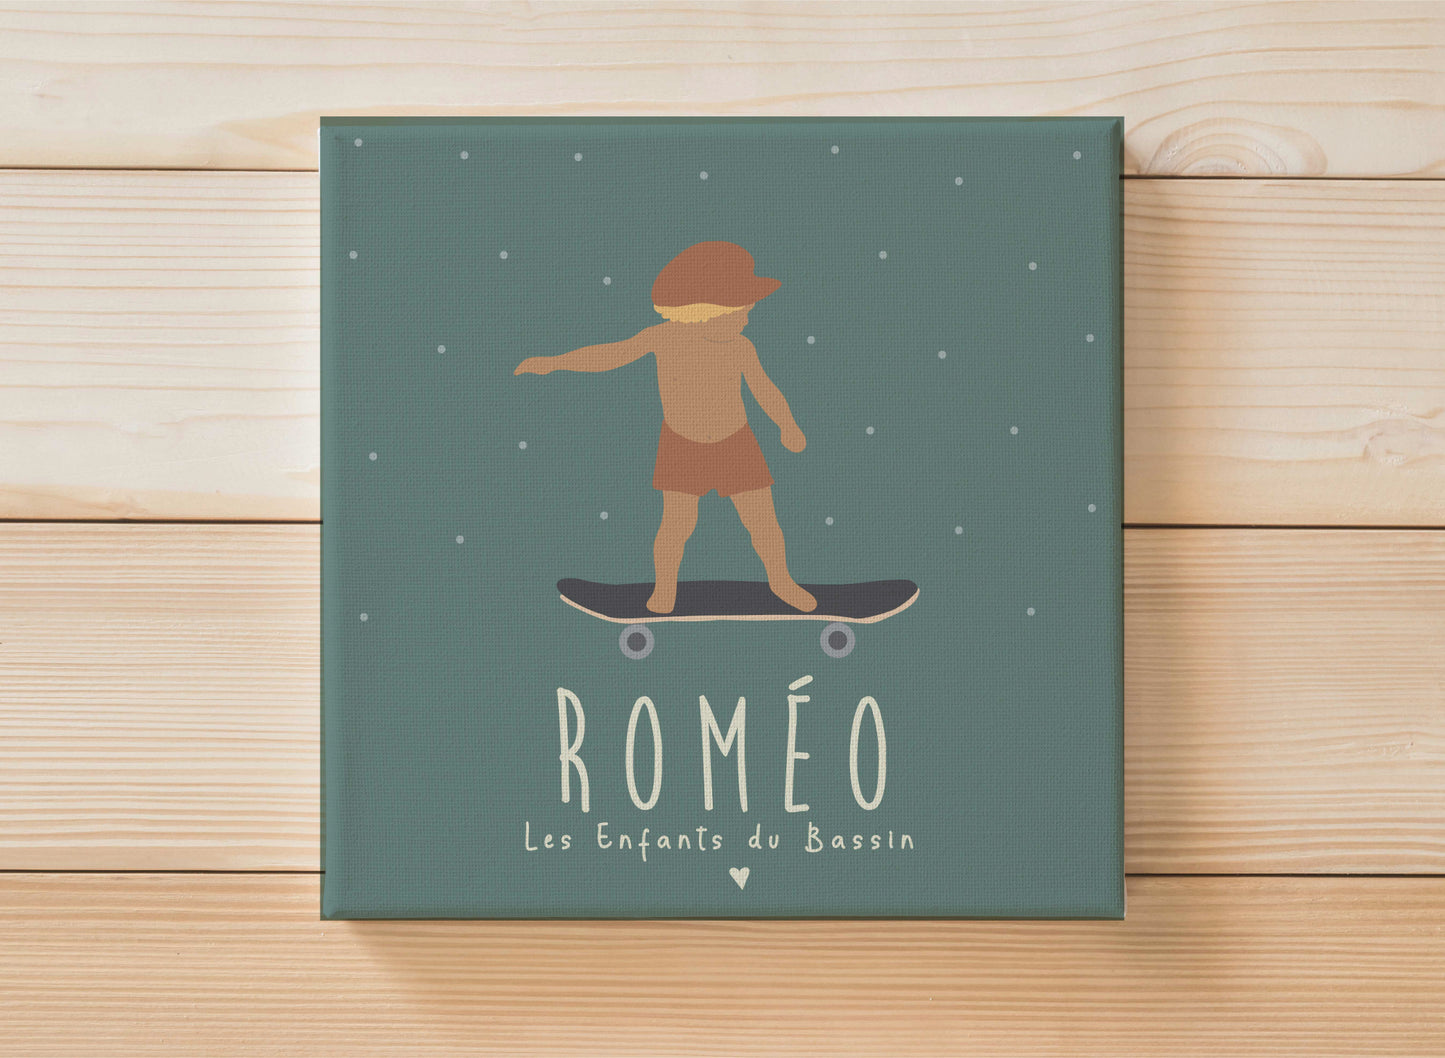 Roméo en skateboard